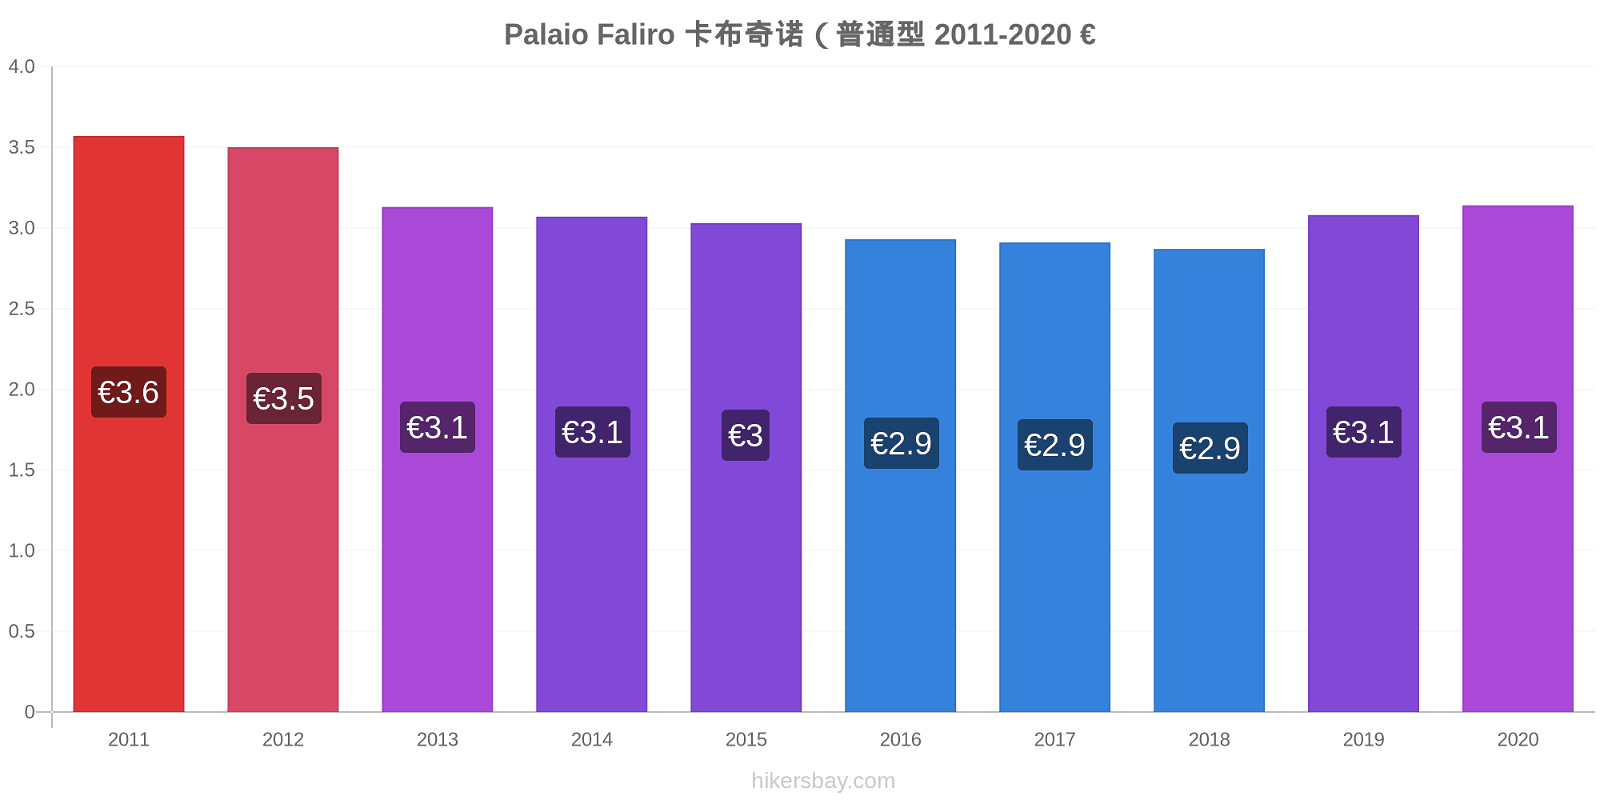 Palaio Faliro 价格变化 卡布奇诺 （定期） hikersbay.com